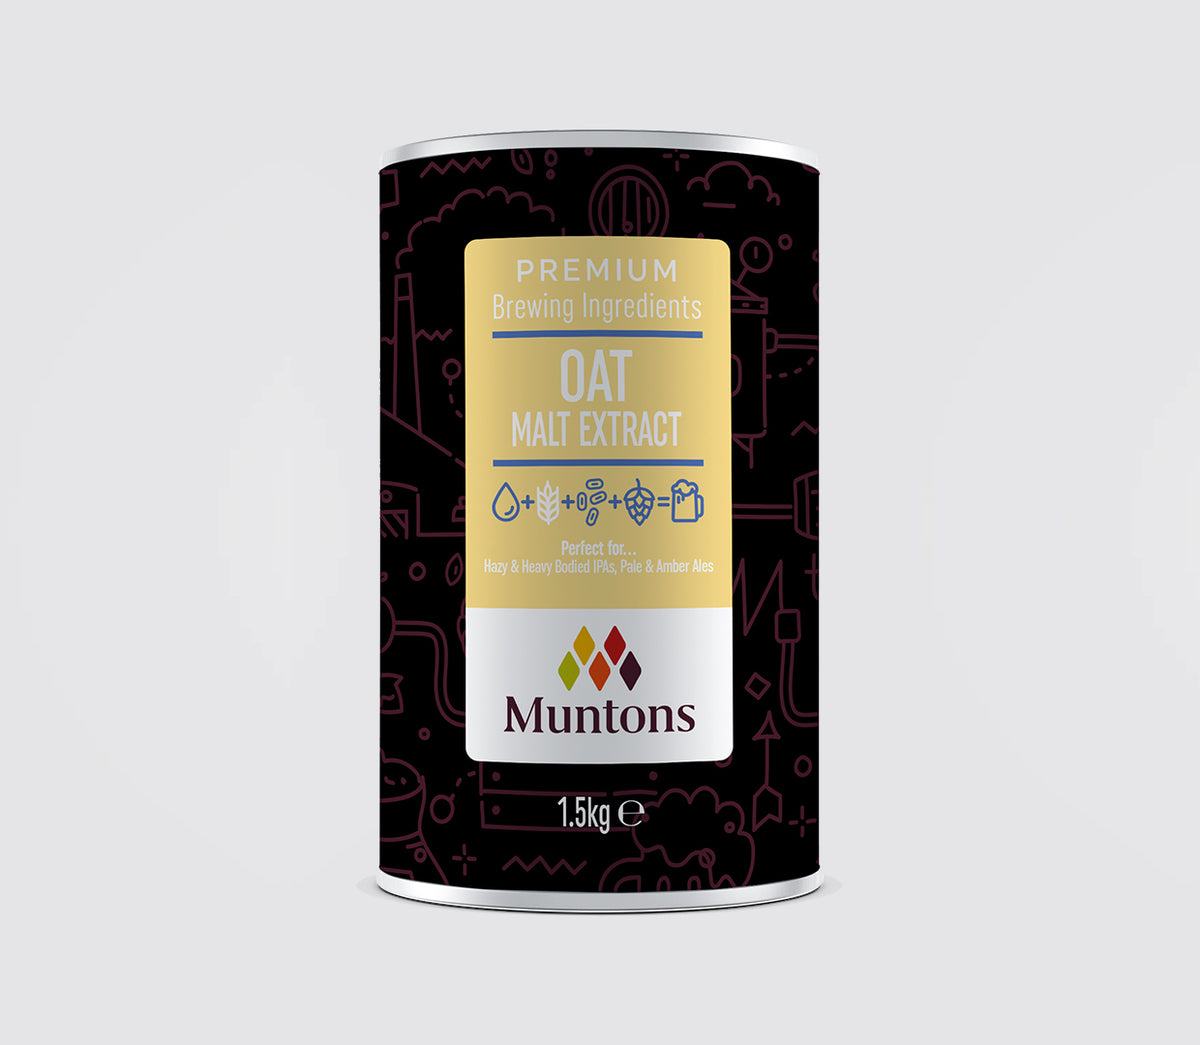 Muntons Oat Malt Extract 1.5kg - All Things Fermented | Home Brew Shop NZ | Supplies | Equipment